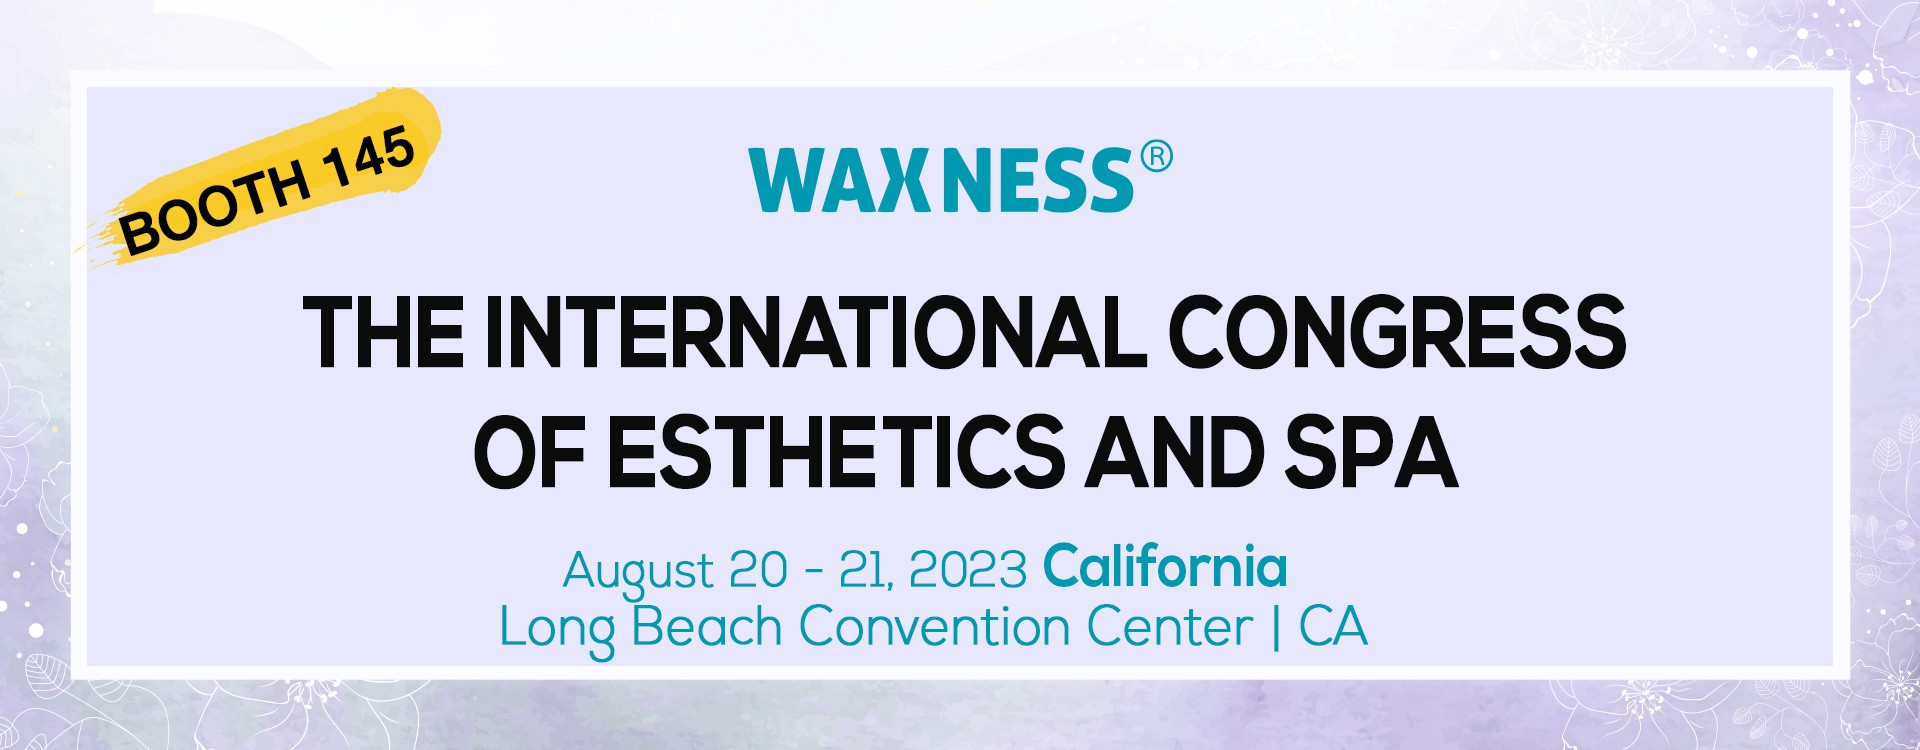 International Congress of Esthetics and Spa, CA